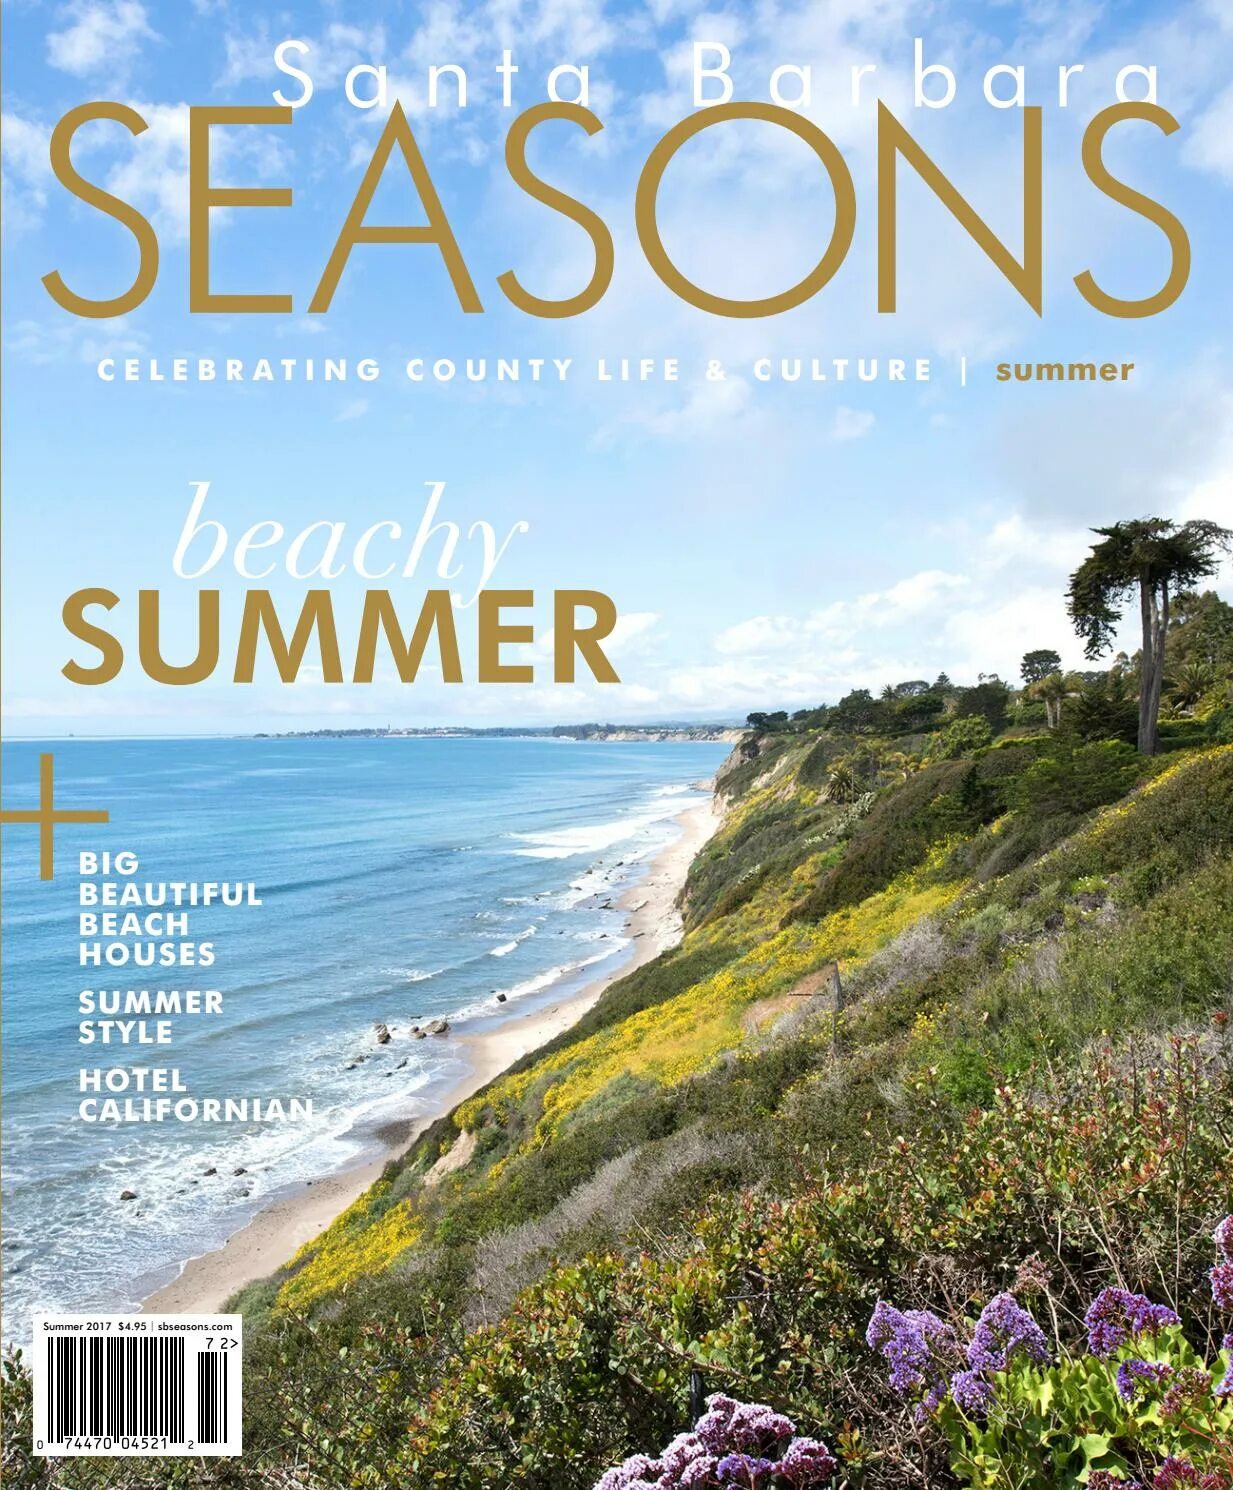 Сизонс журнал. Seasons журнал. Журнал Сизонс обложки. Seasons Magazine. Журнал Сизонс.